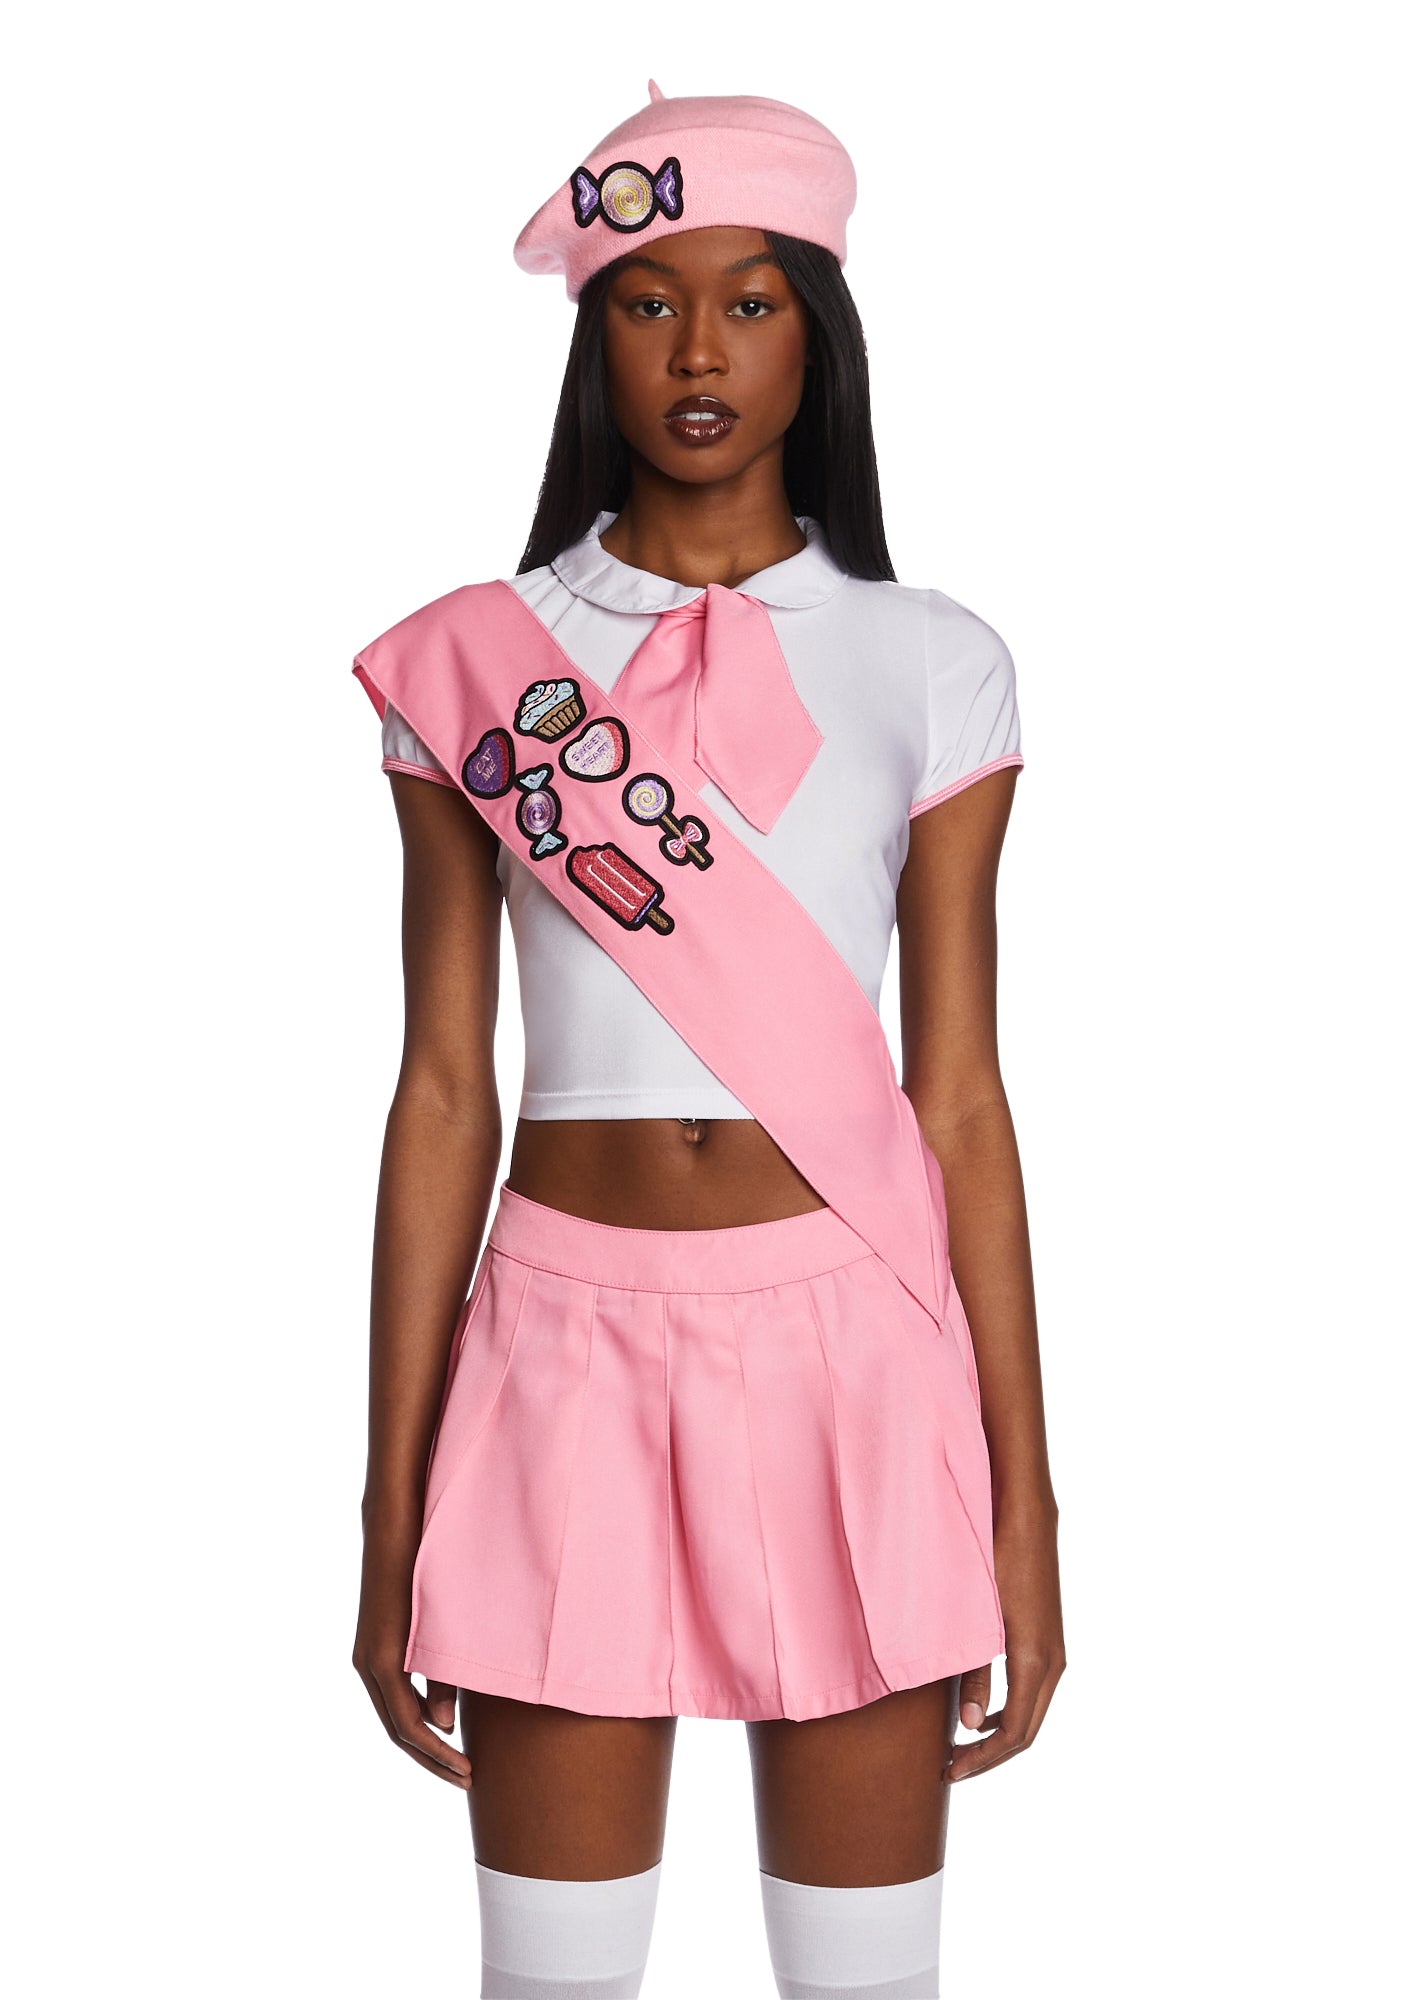 Trickz N Treatz Candy Girl Scout Costume Set - Pink